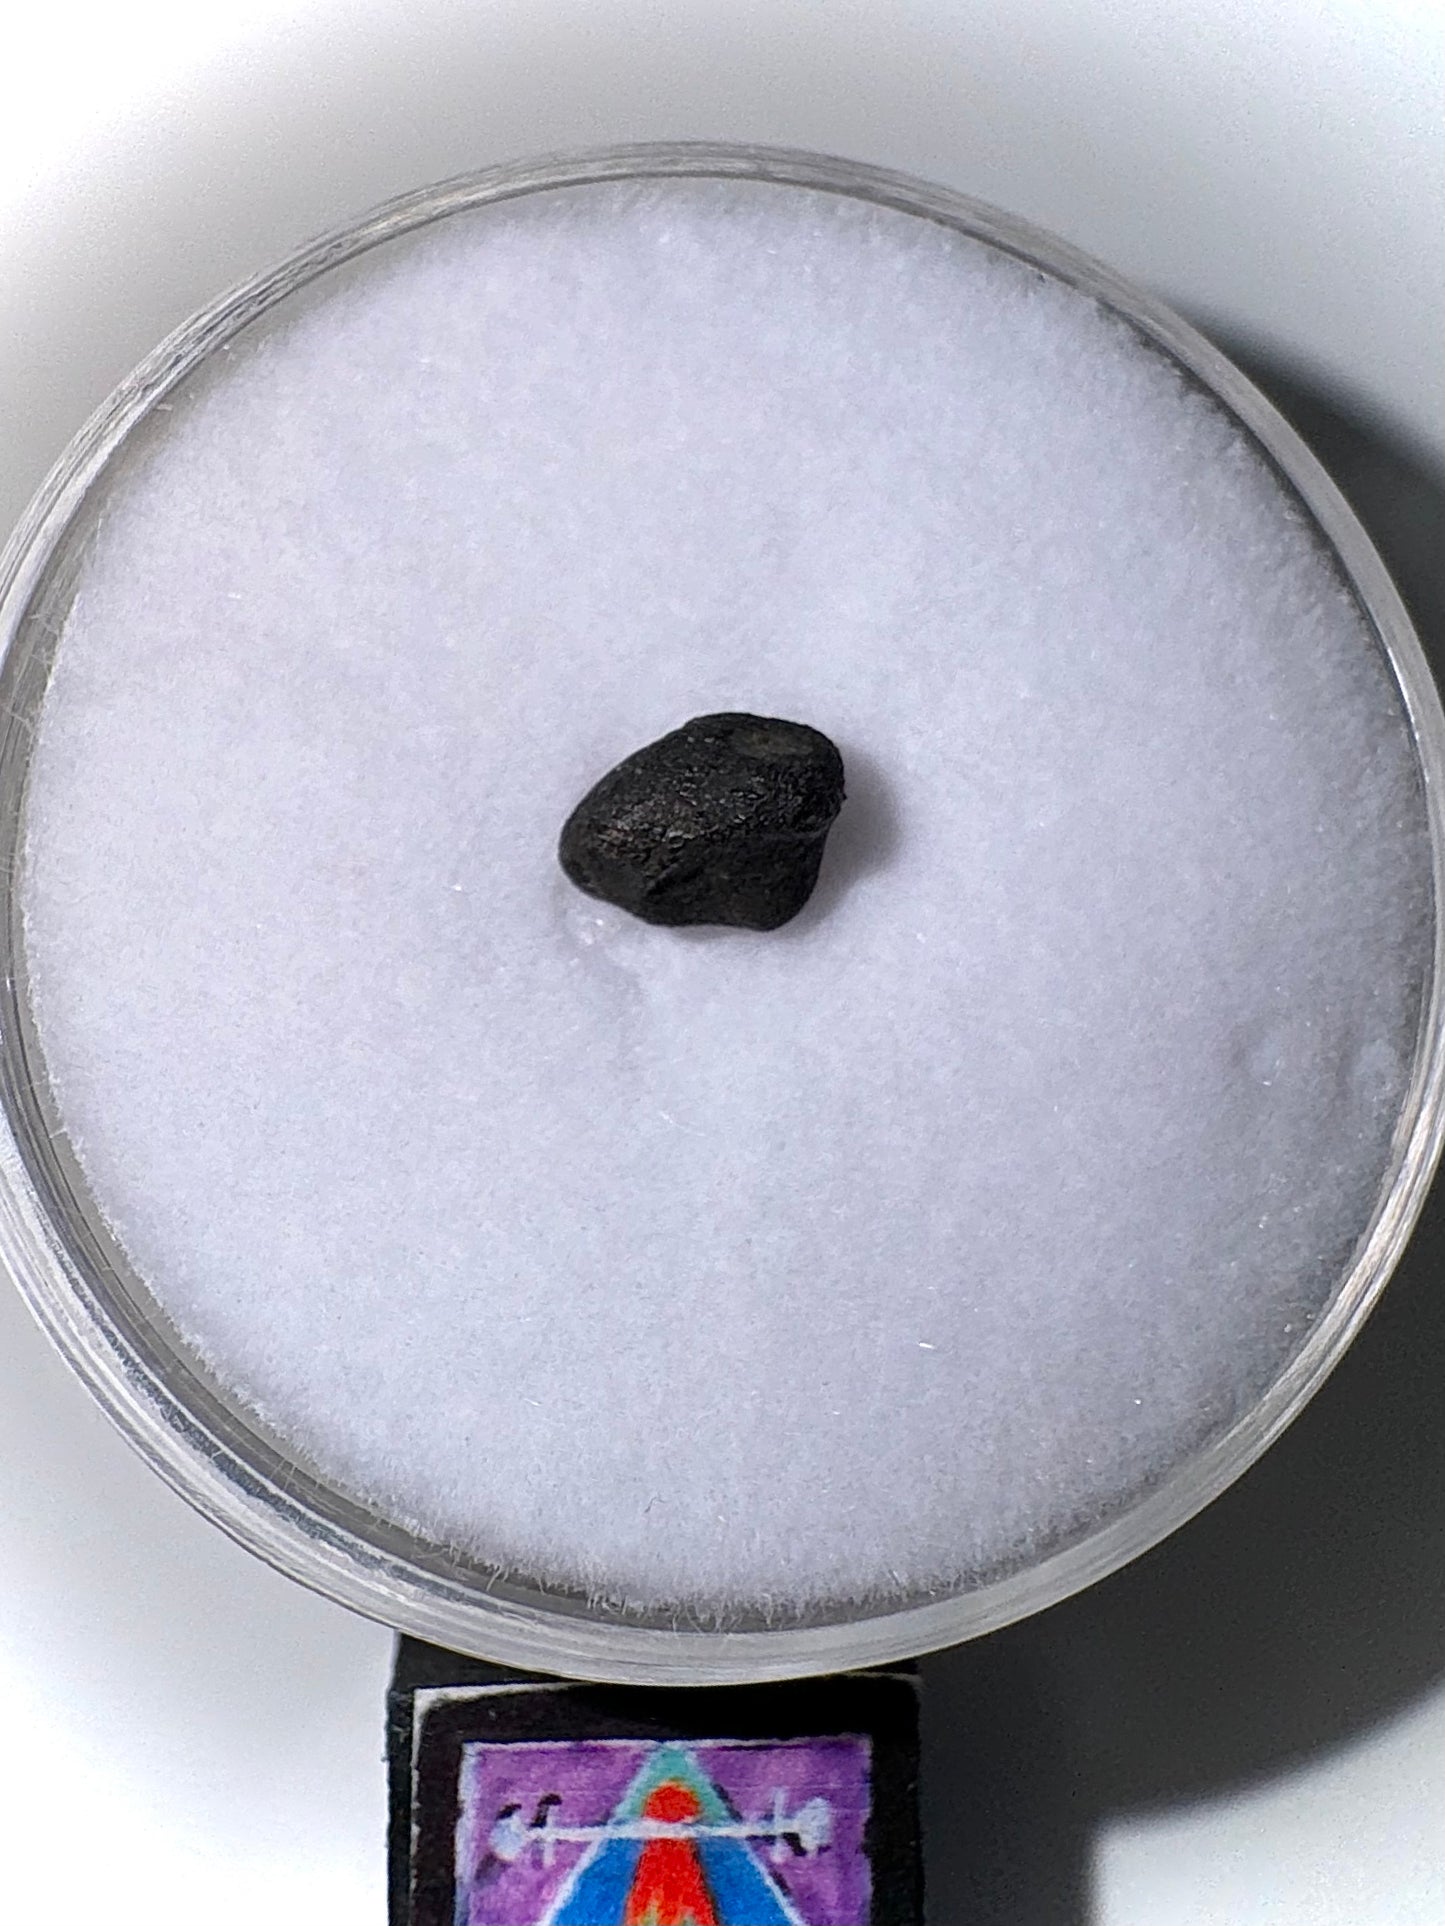 Chelyabinsk Meteorite - The Famous 2013 Catastrophic Russia Event